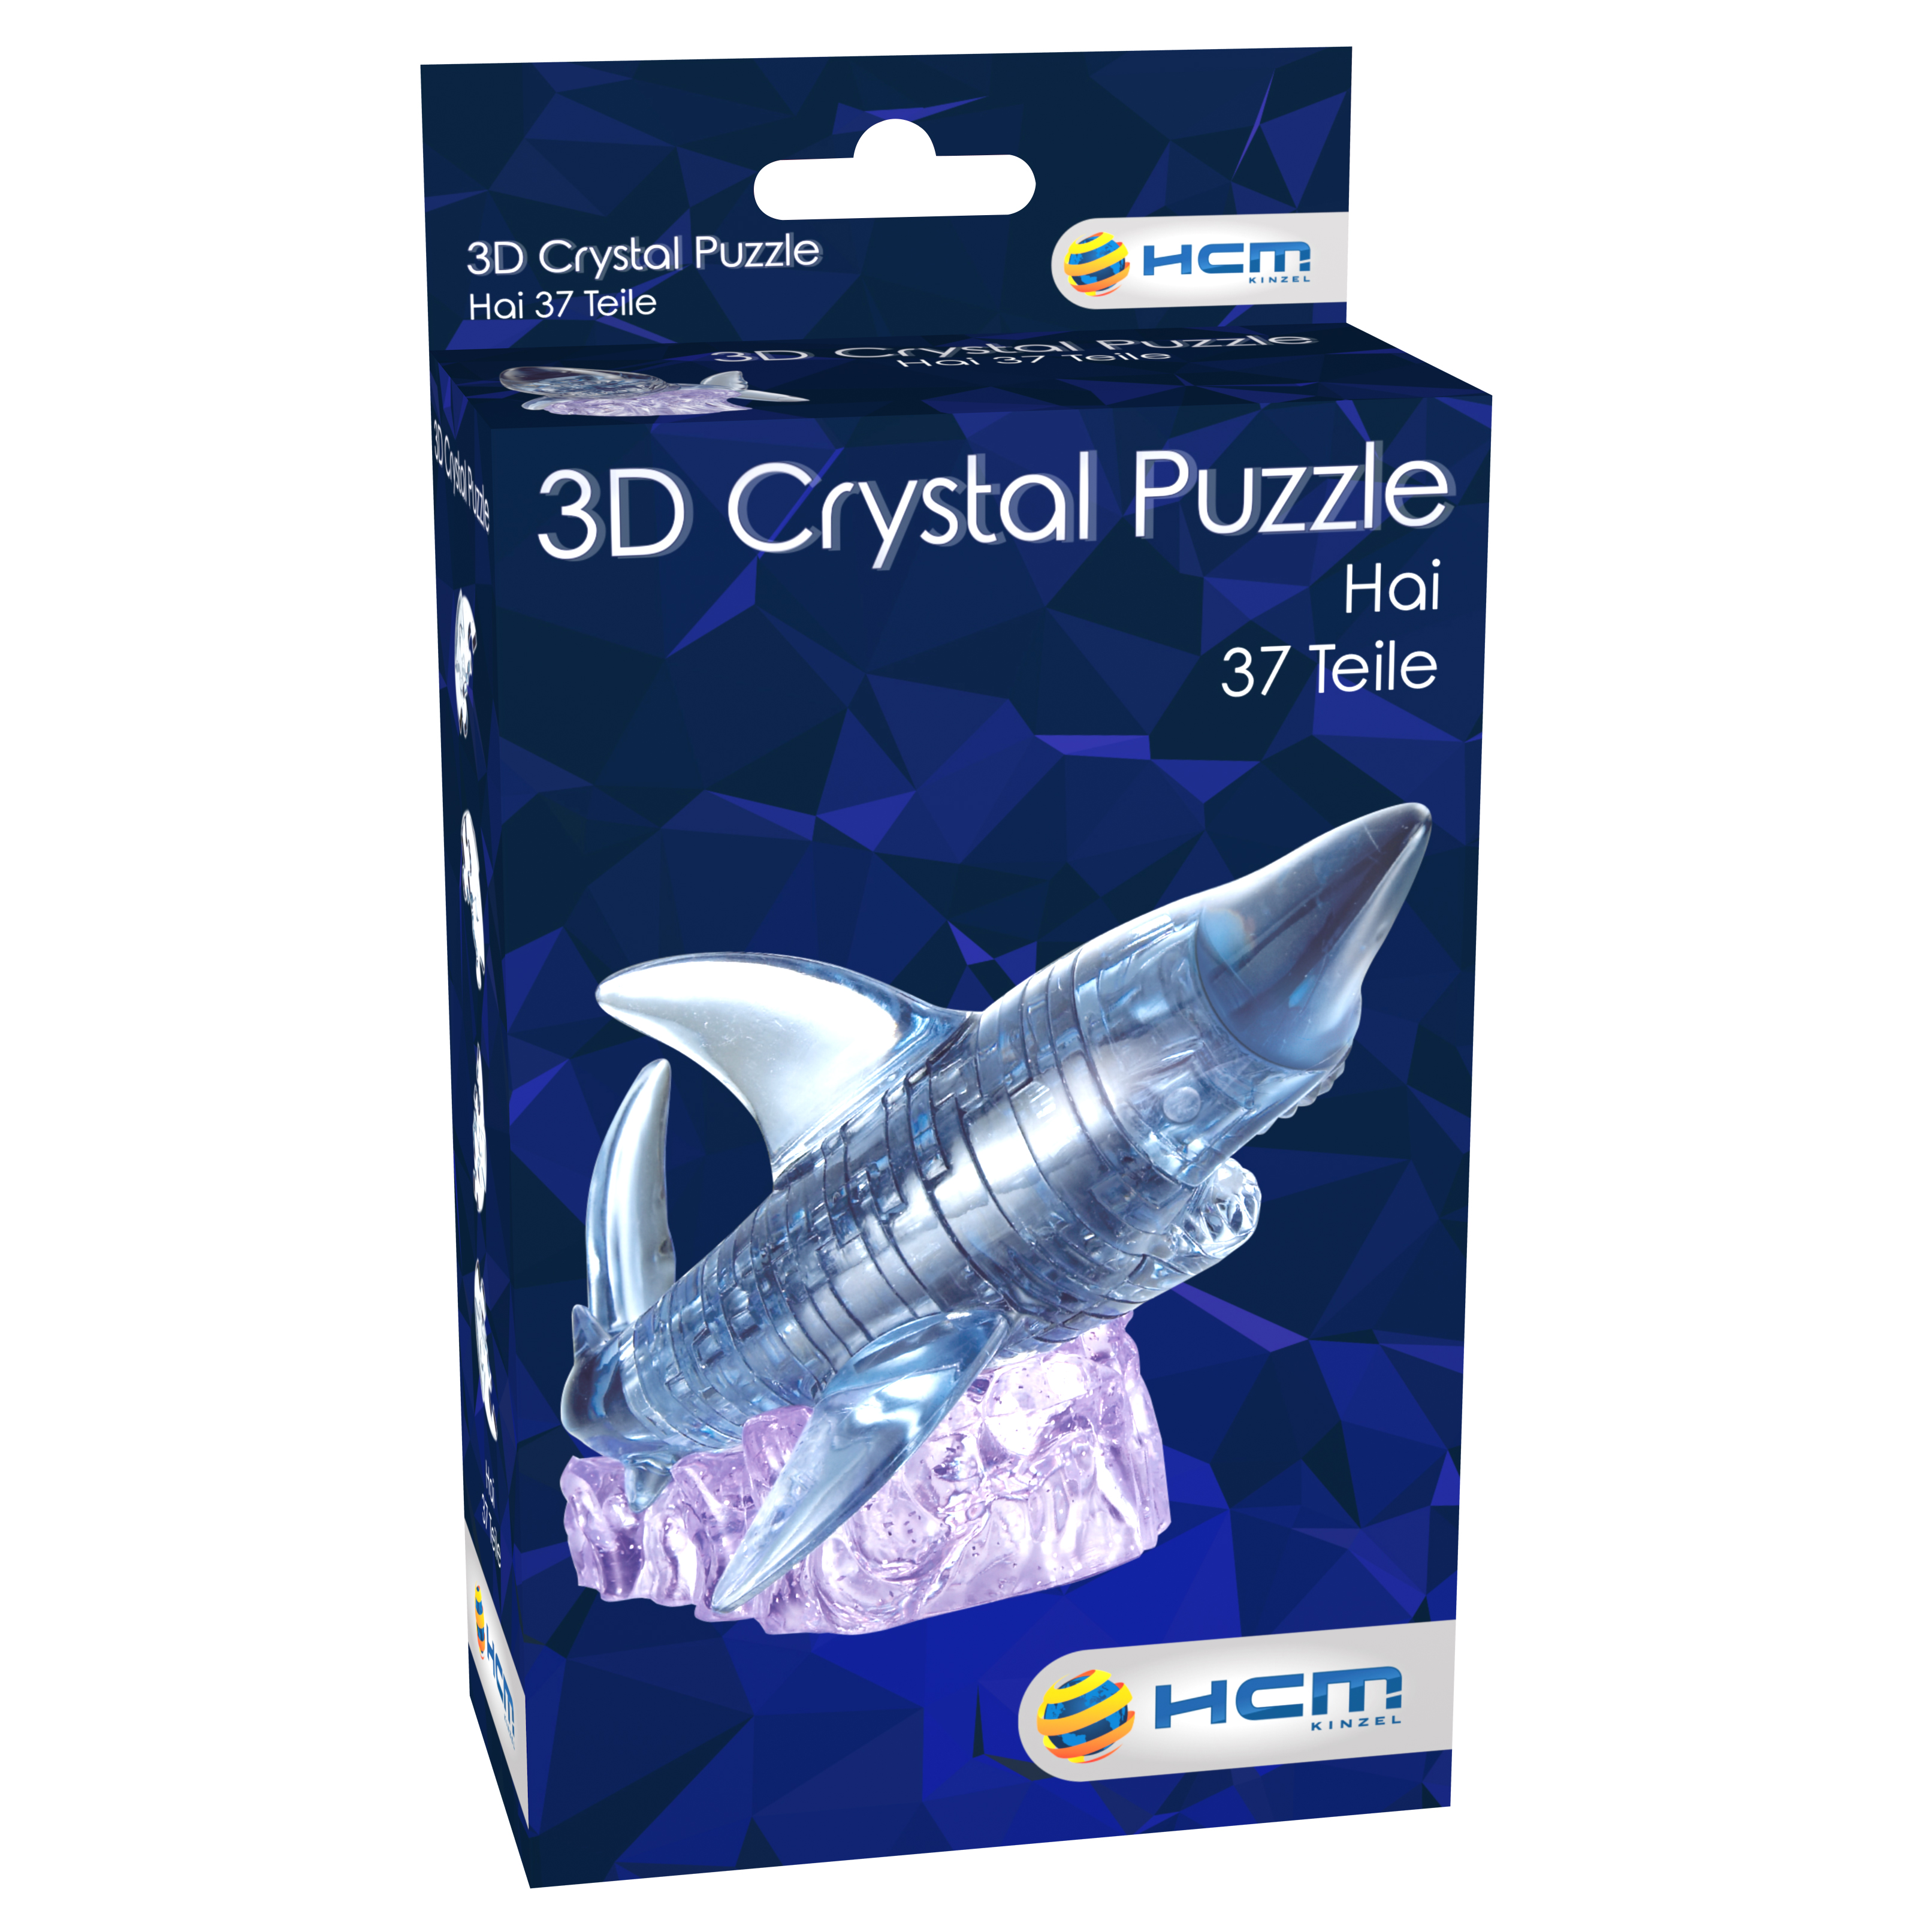 Hai 37 Teile weißer Hai Kristall Puzzle 3D Crystal Puzzle 